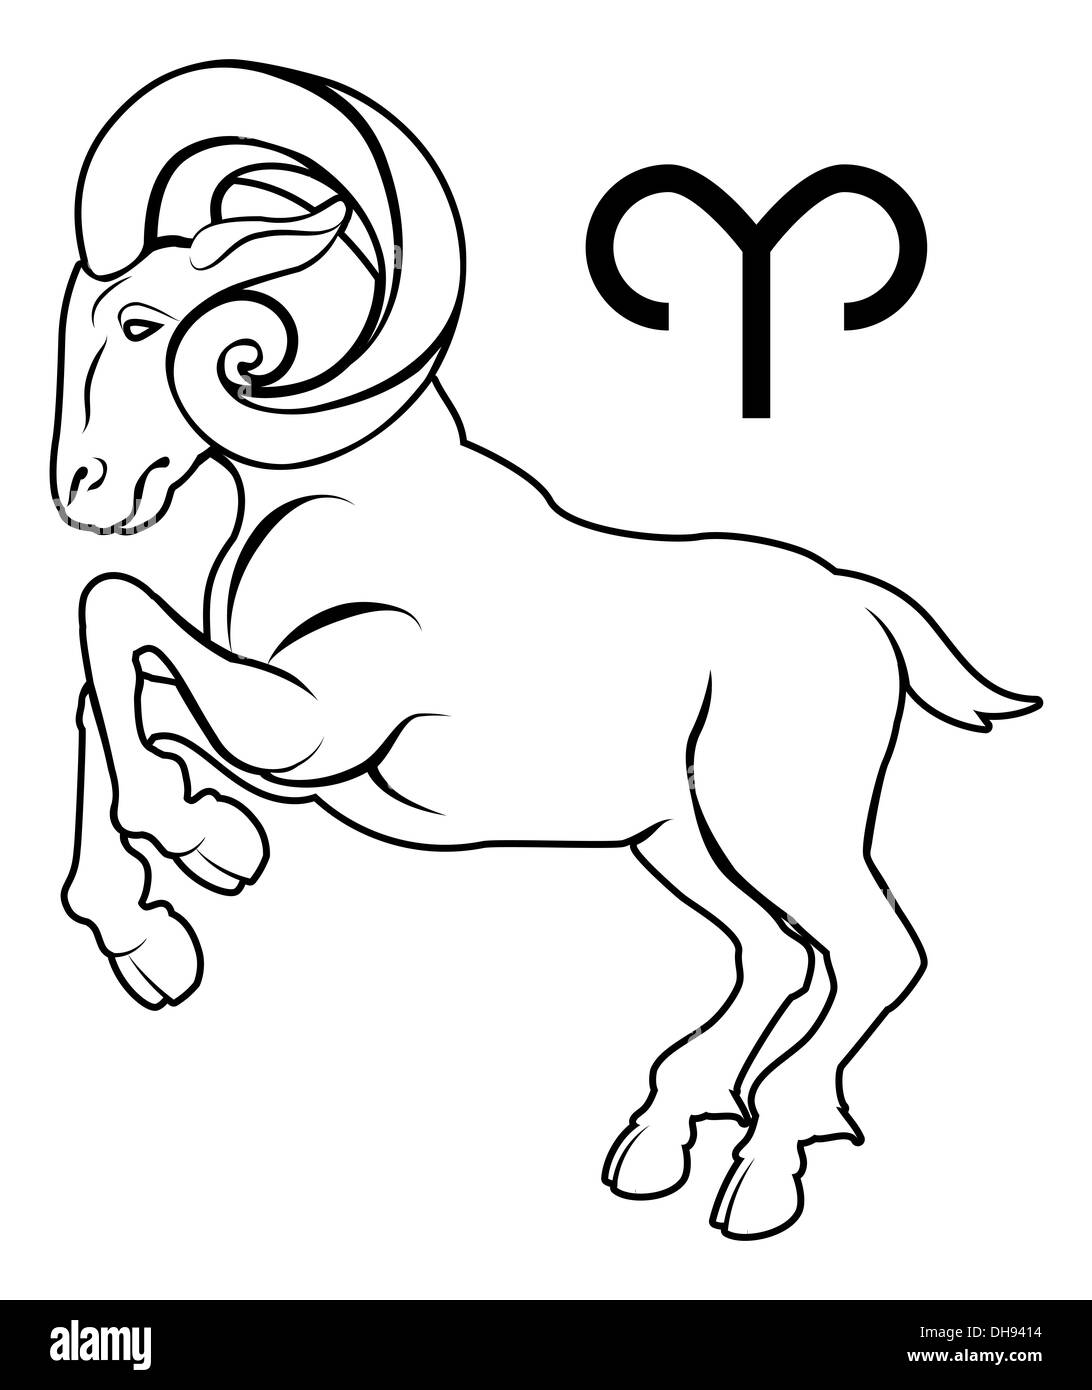 Aries ram horoscope Black and White Stock Photos & Images - Alamy